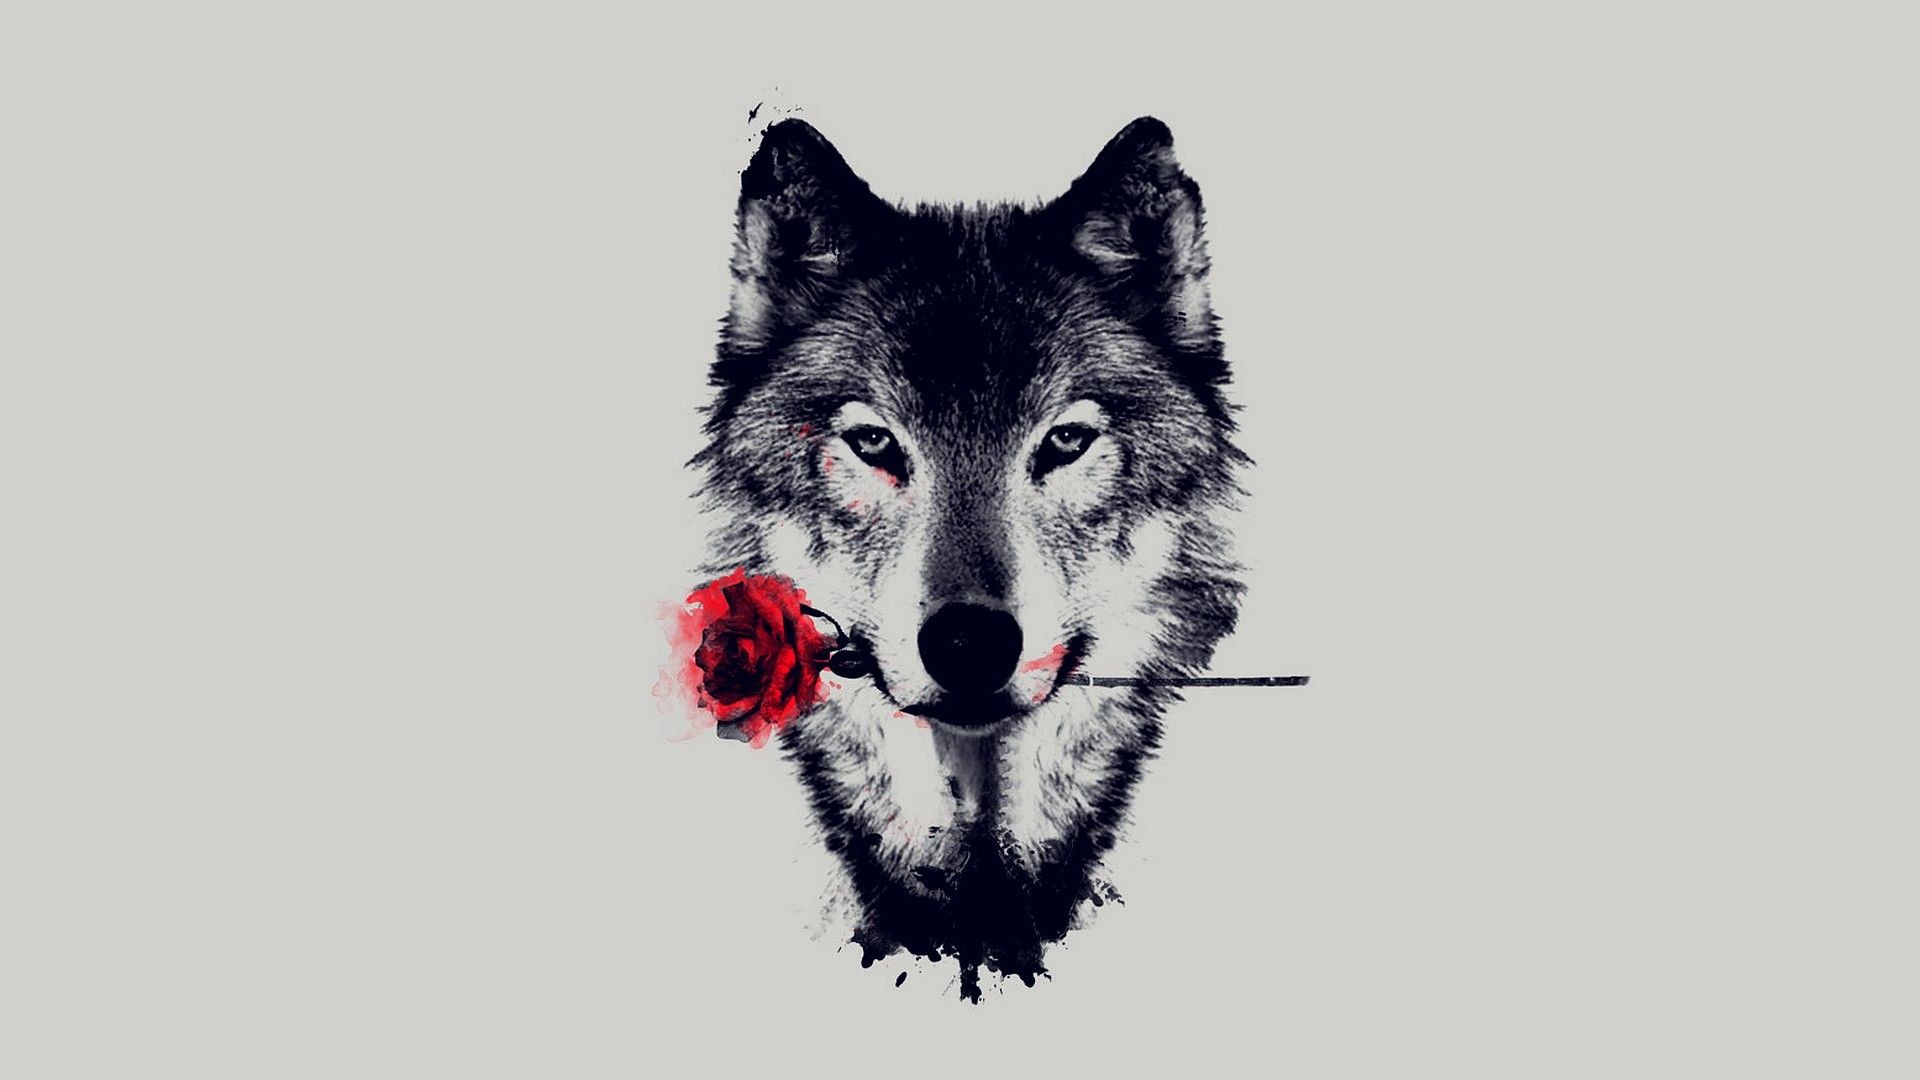 1920x1080 Wolf & Red Roses Wide Desktop Background wallpaper | âªâ¨Spiritâ¡Wolfsâ¨âªâ¿â¡ |  Pinterest | Desktop backgrounds and Wolf